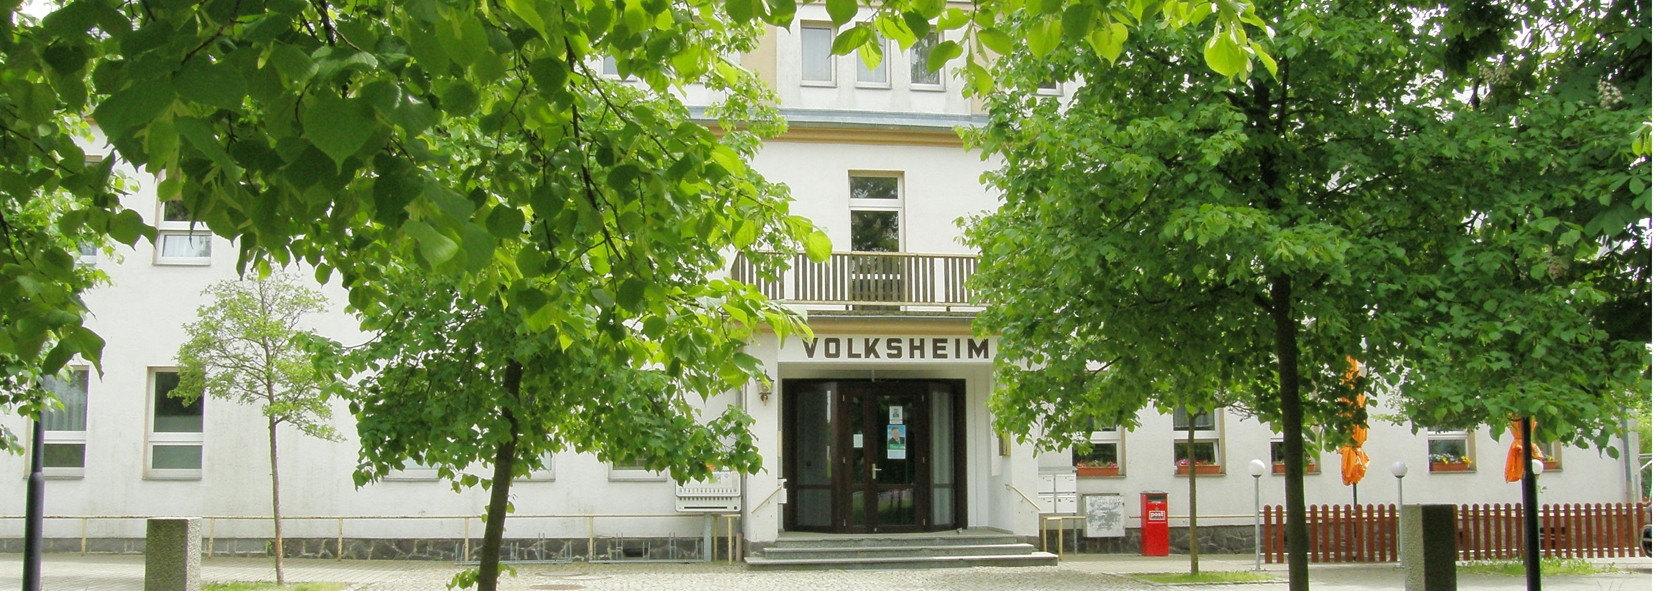 volksheim